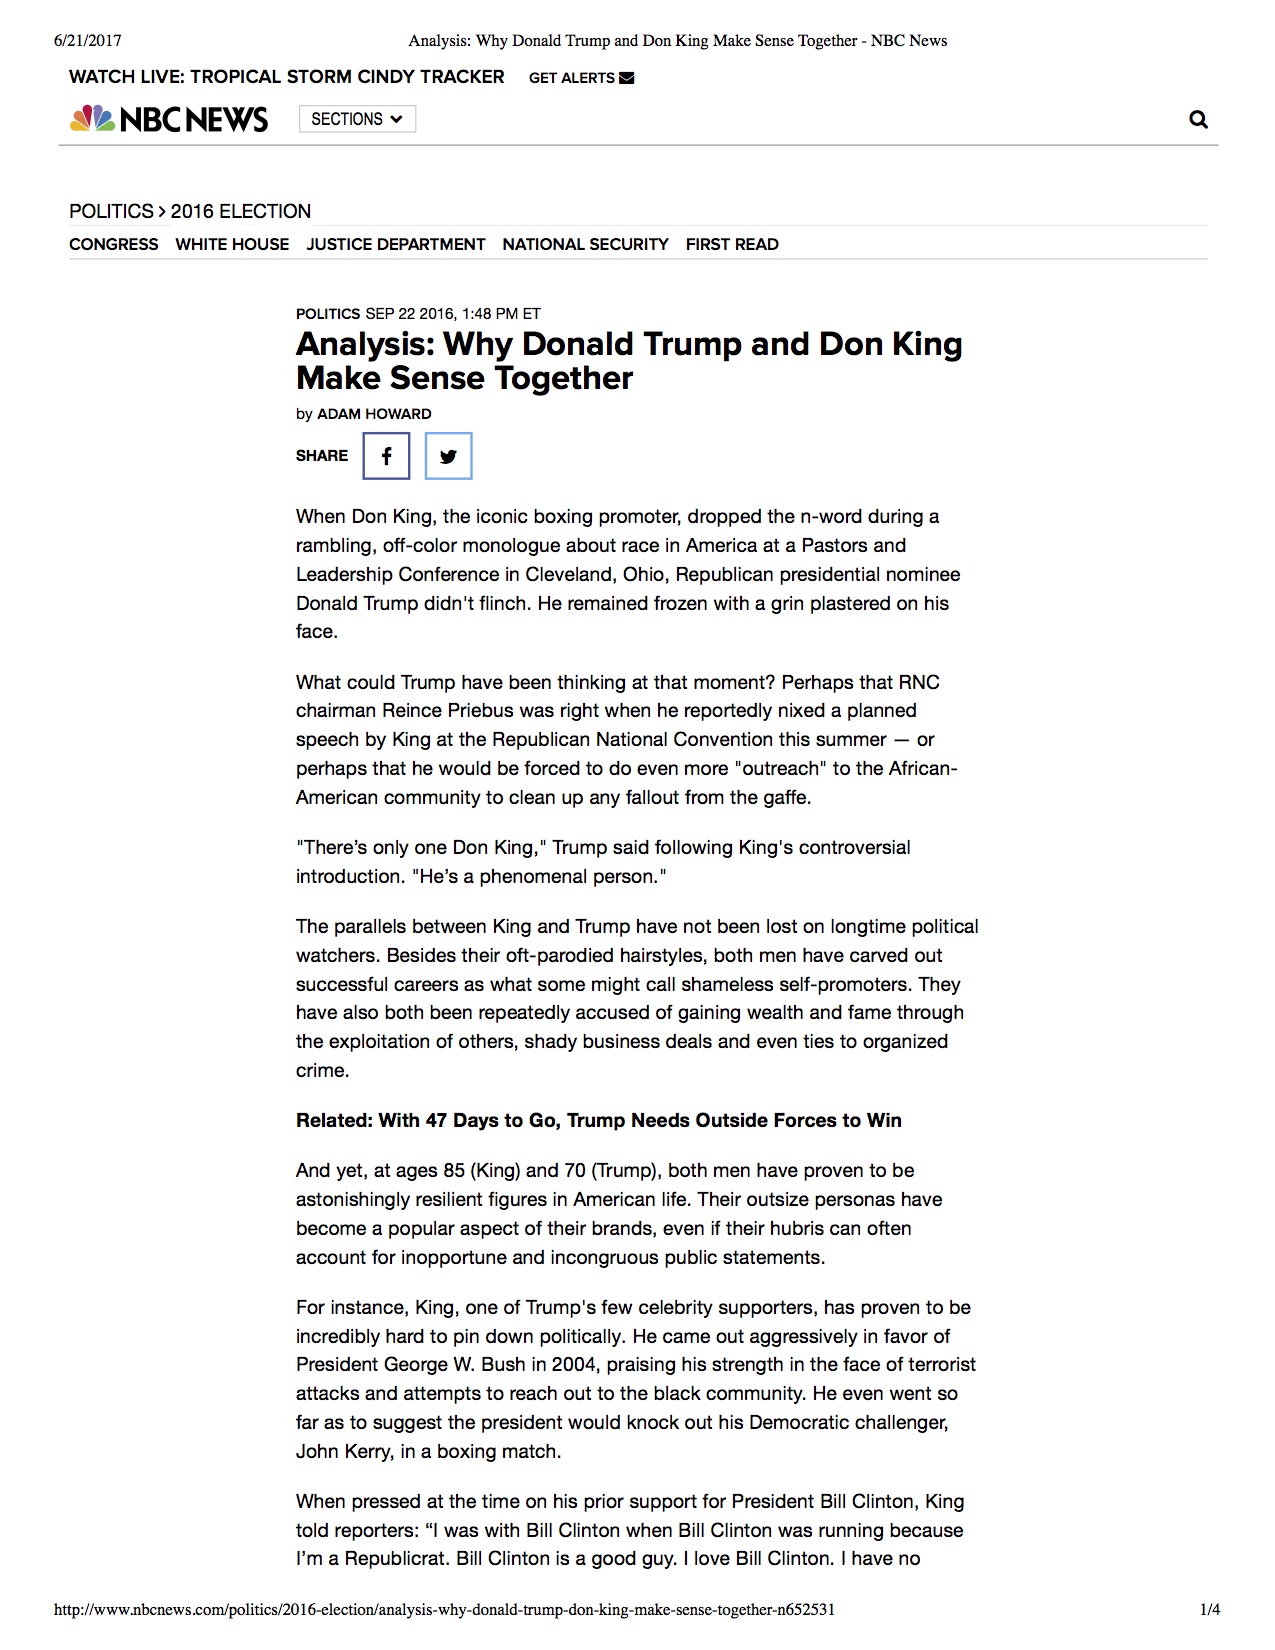 Analysis_ Why Donald Trump and Don King Make Sense Together - NBC News.jpg